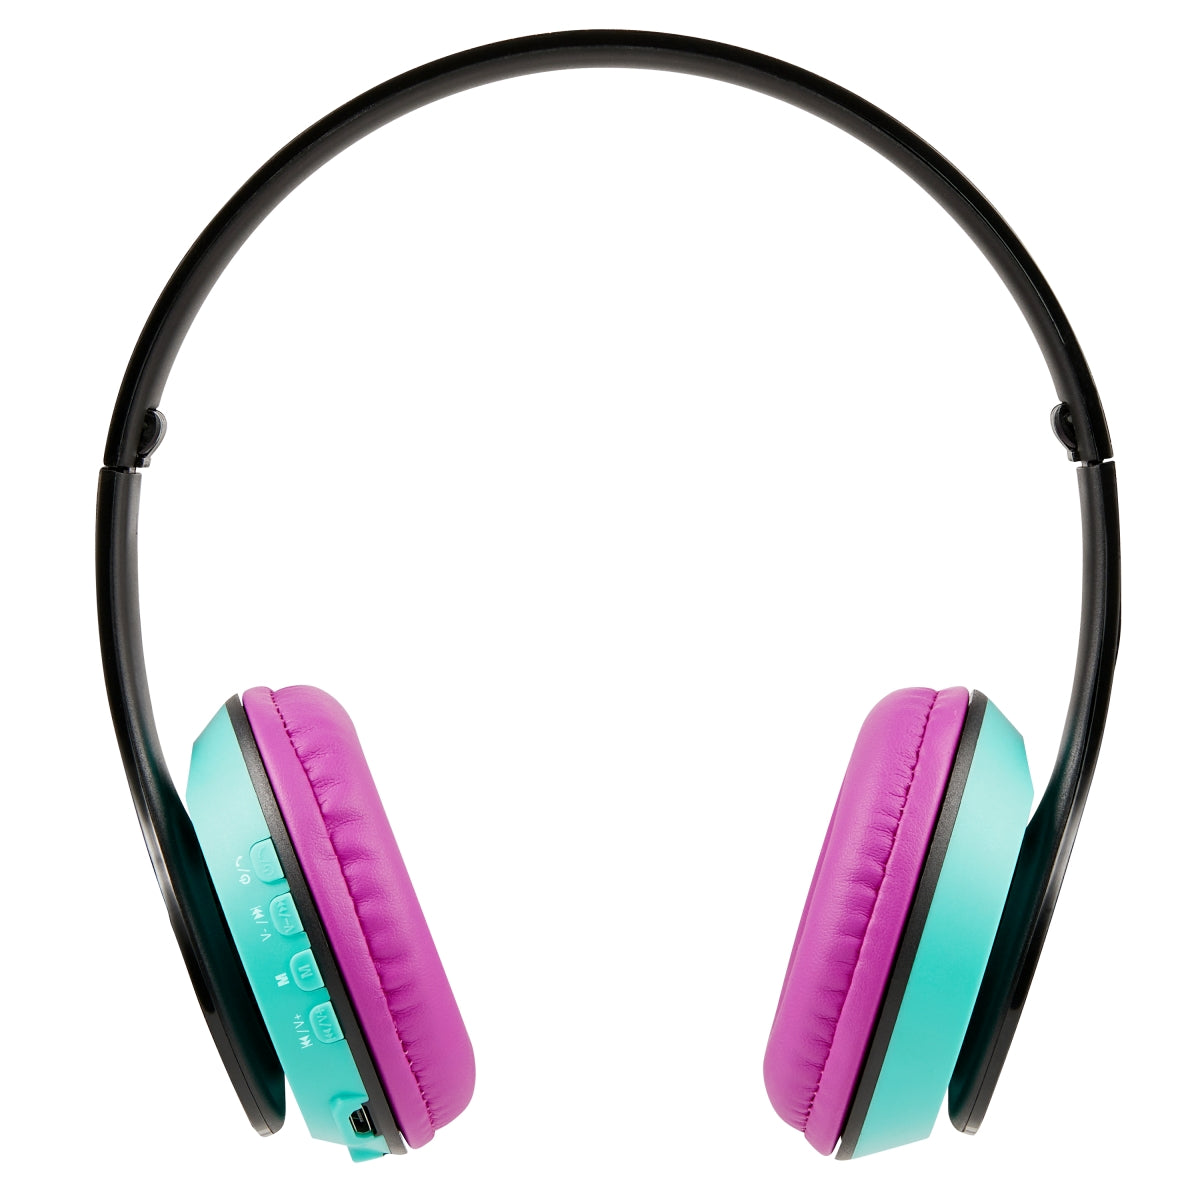 Disney OPP Bluetooth Headphone - Lightyear